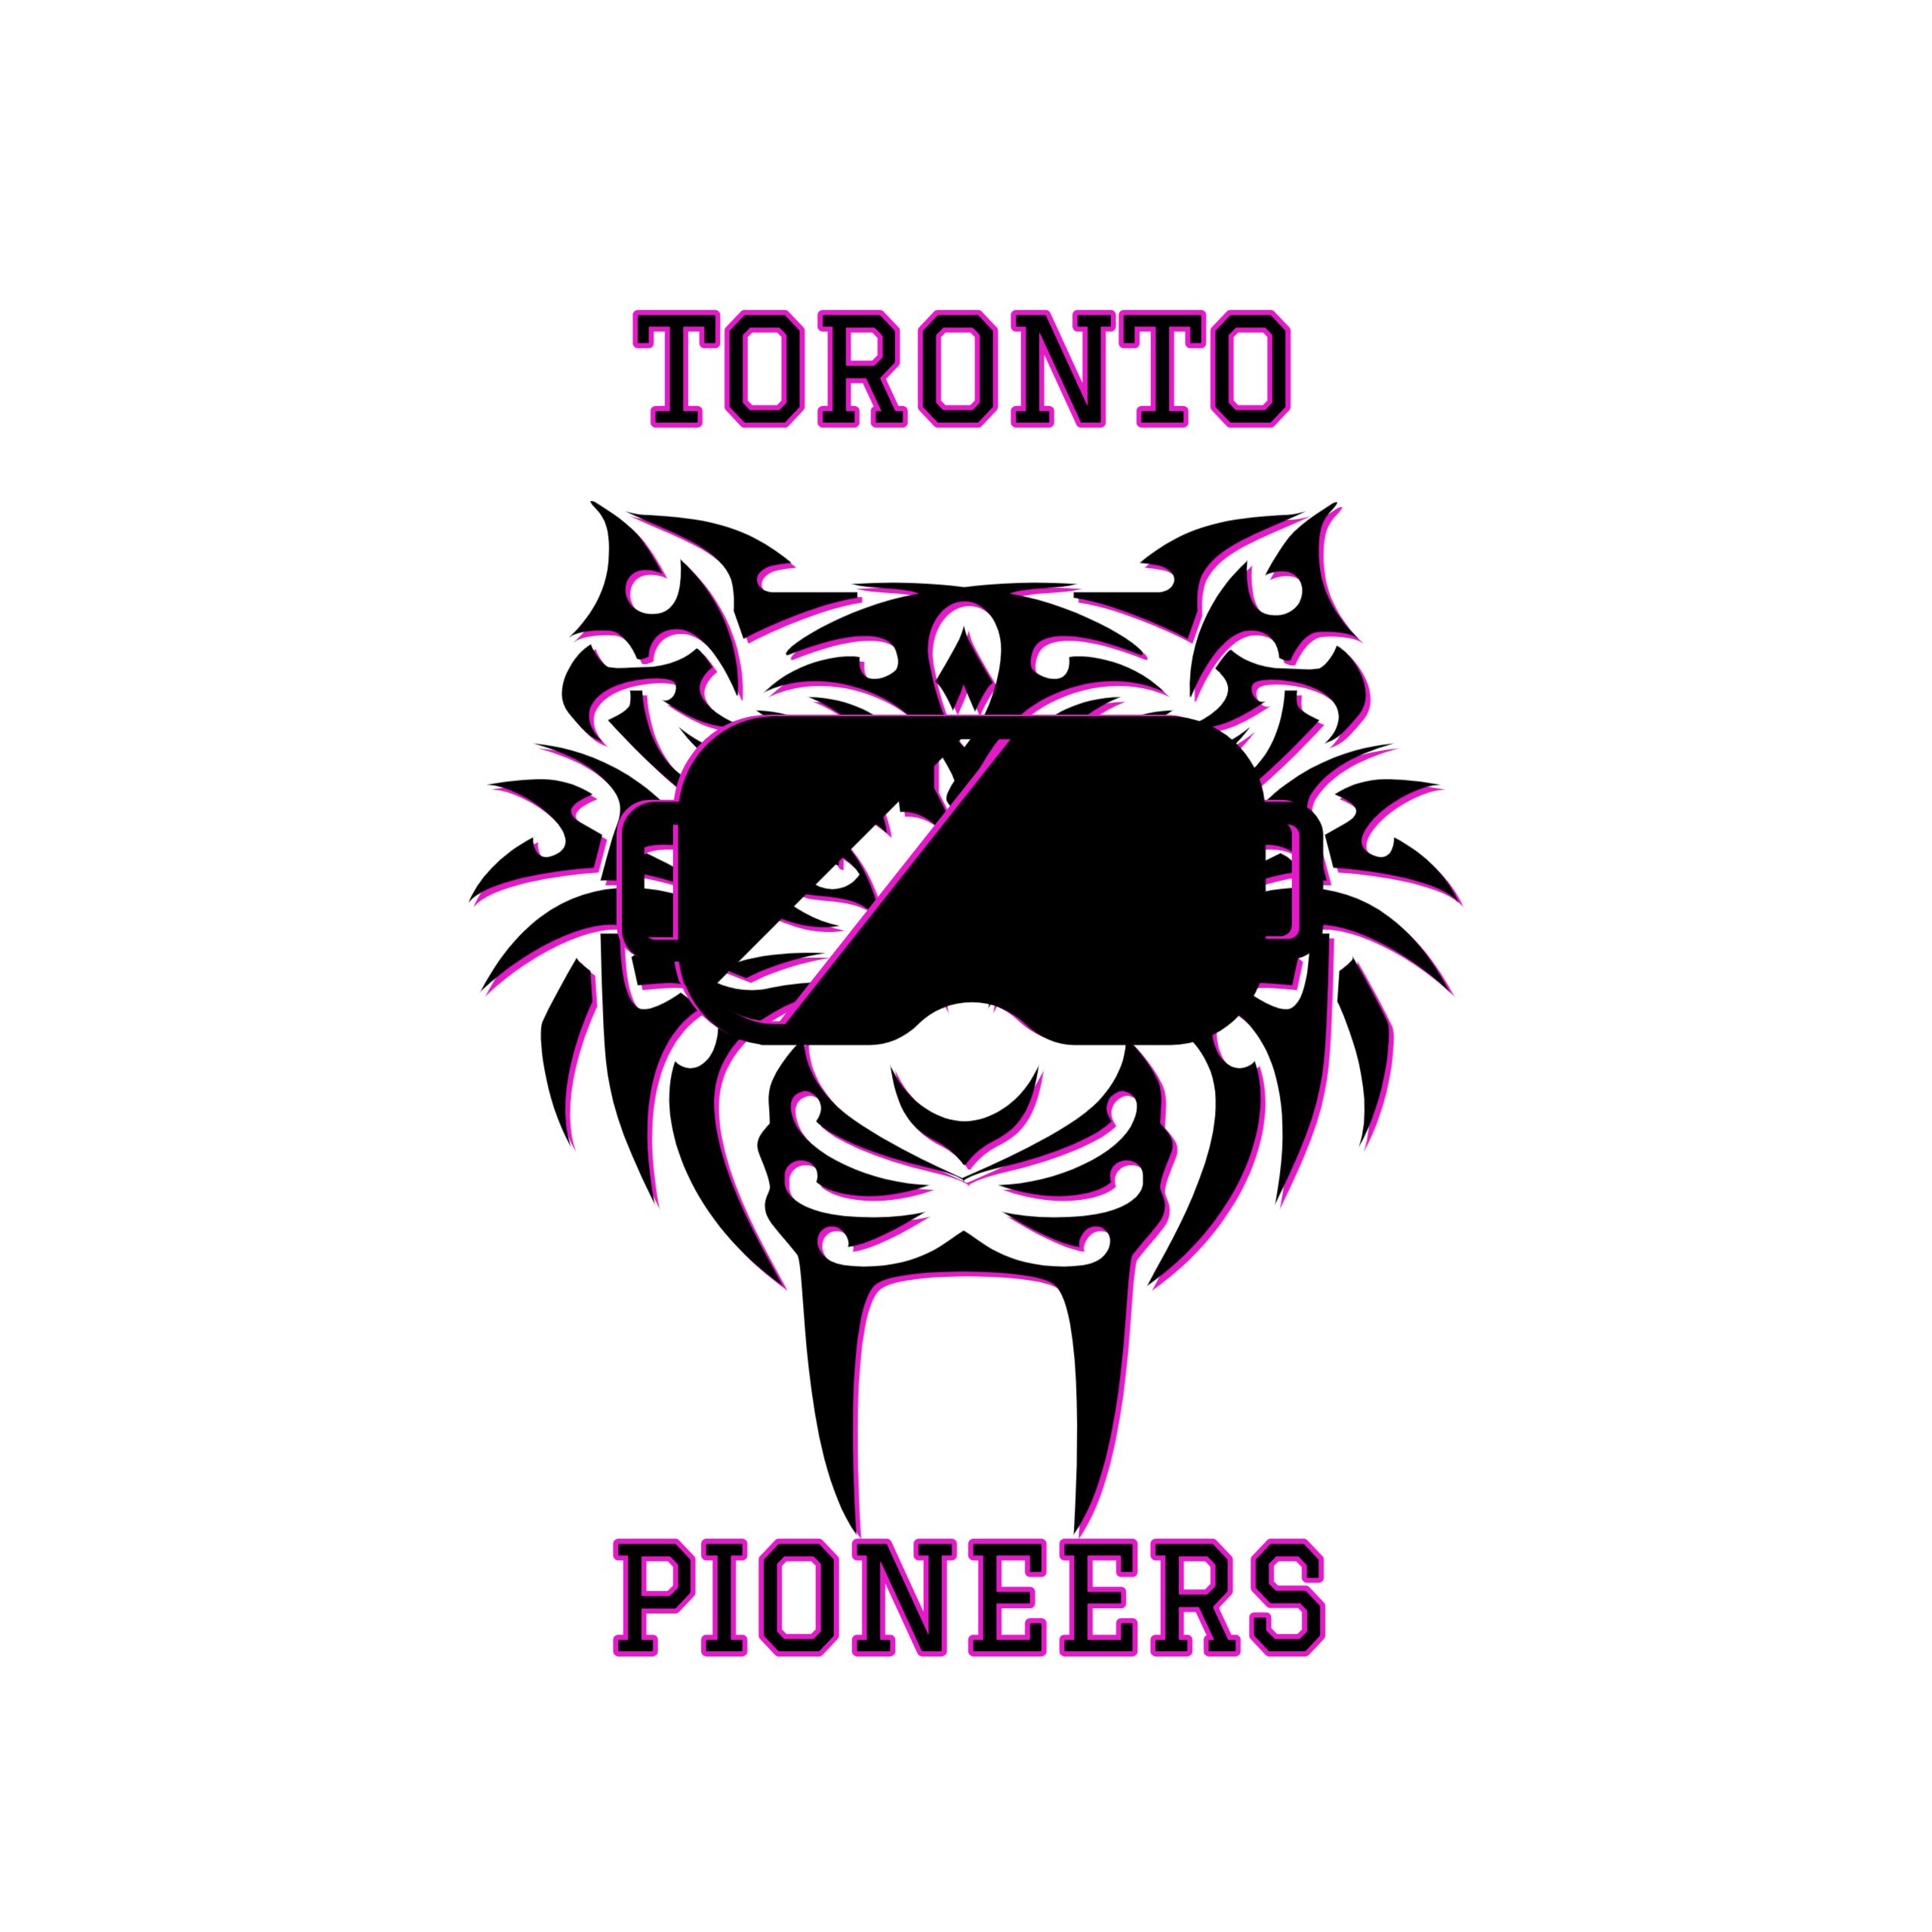 Toronto pioneers logo